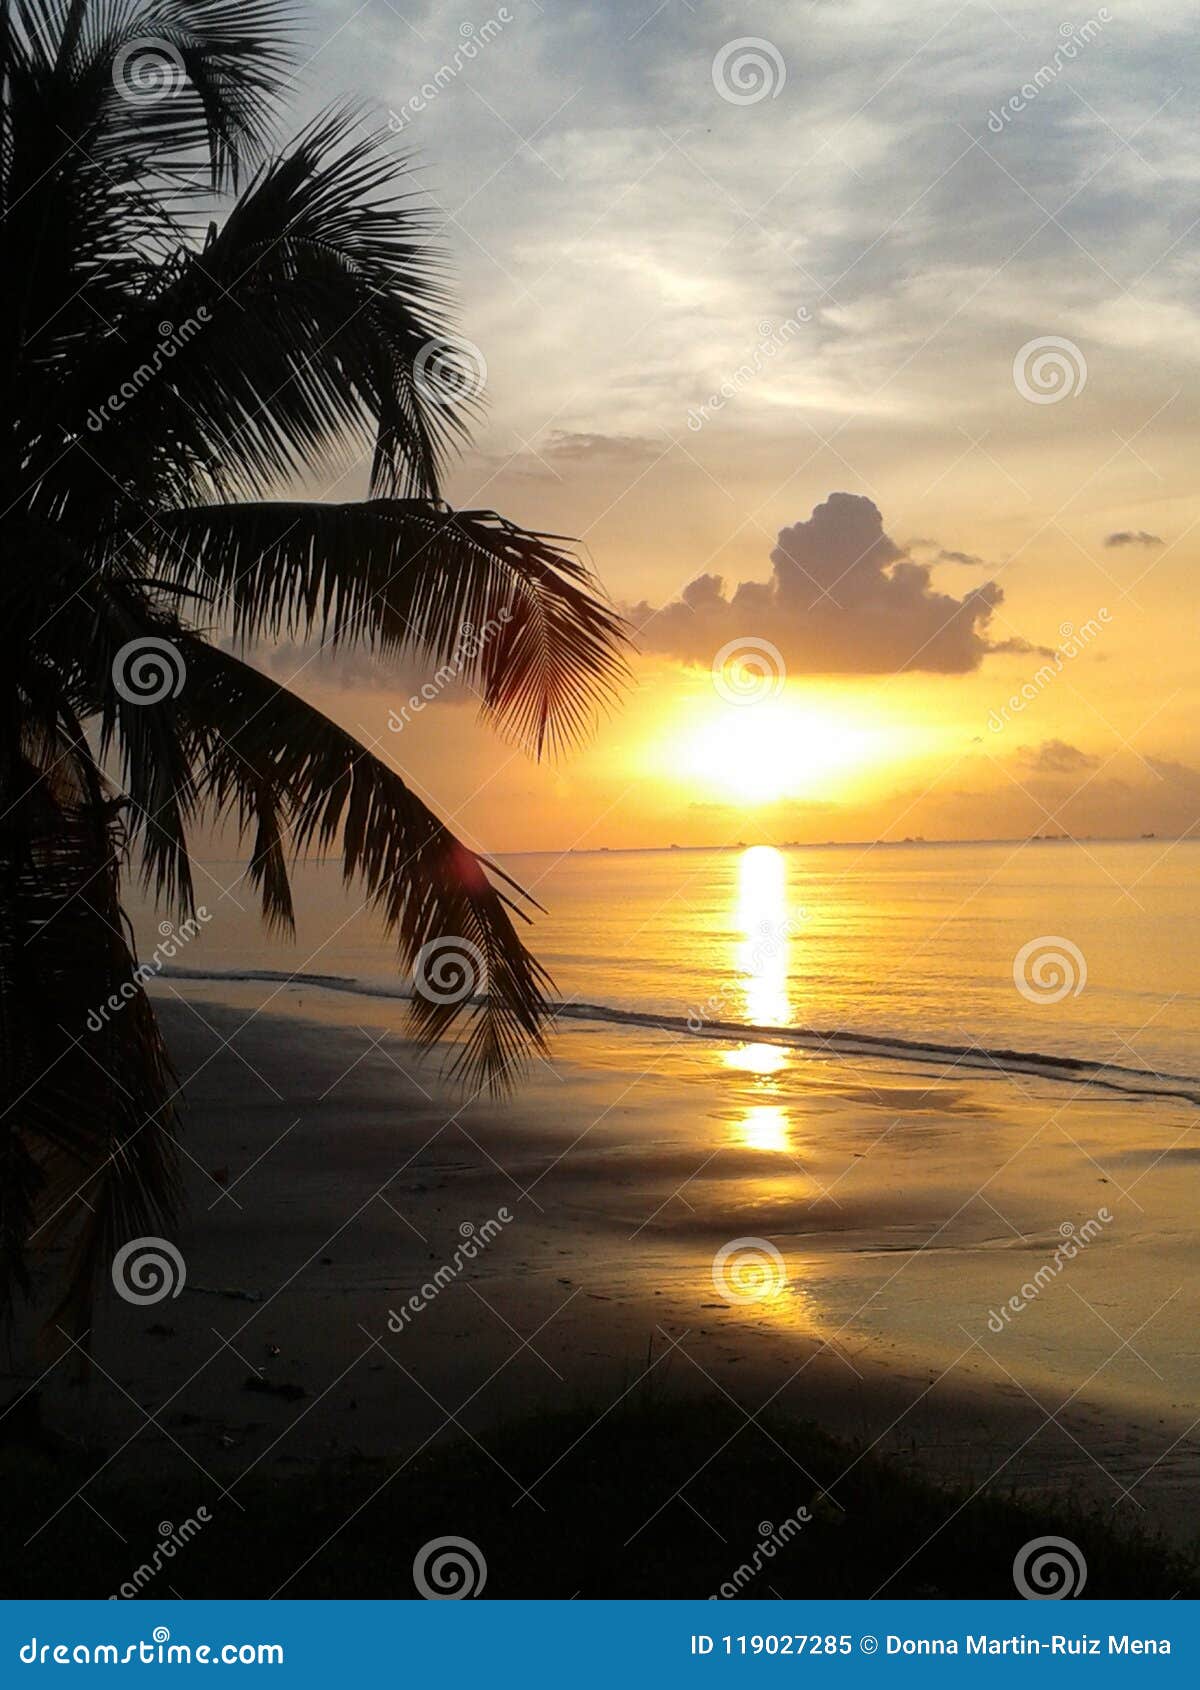 guapo beach, point fortin, trinidad and tobago